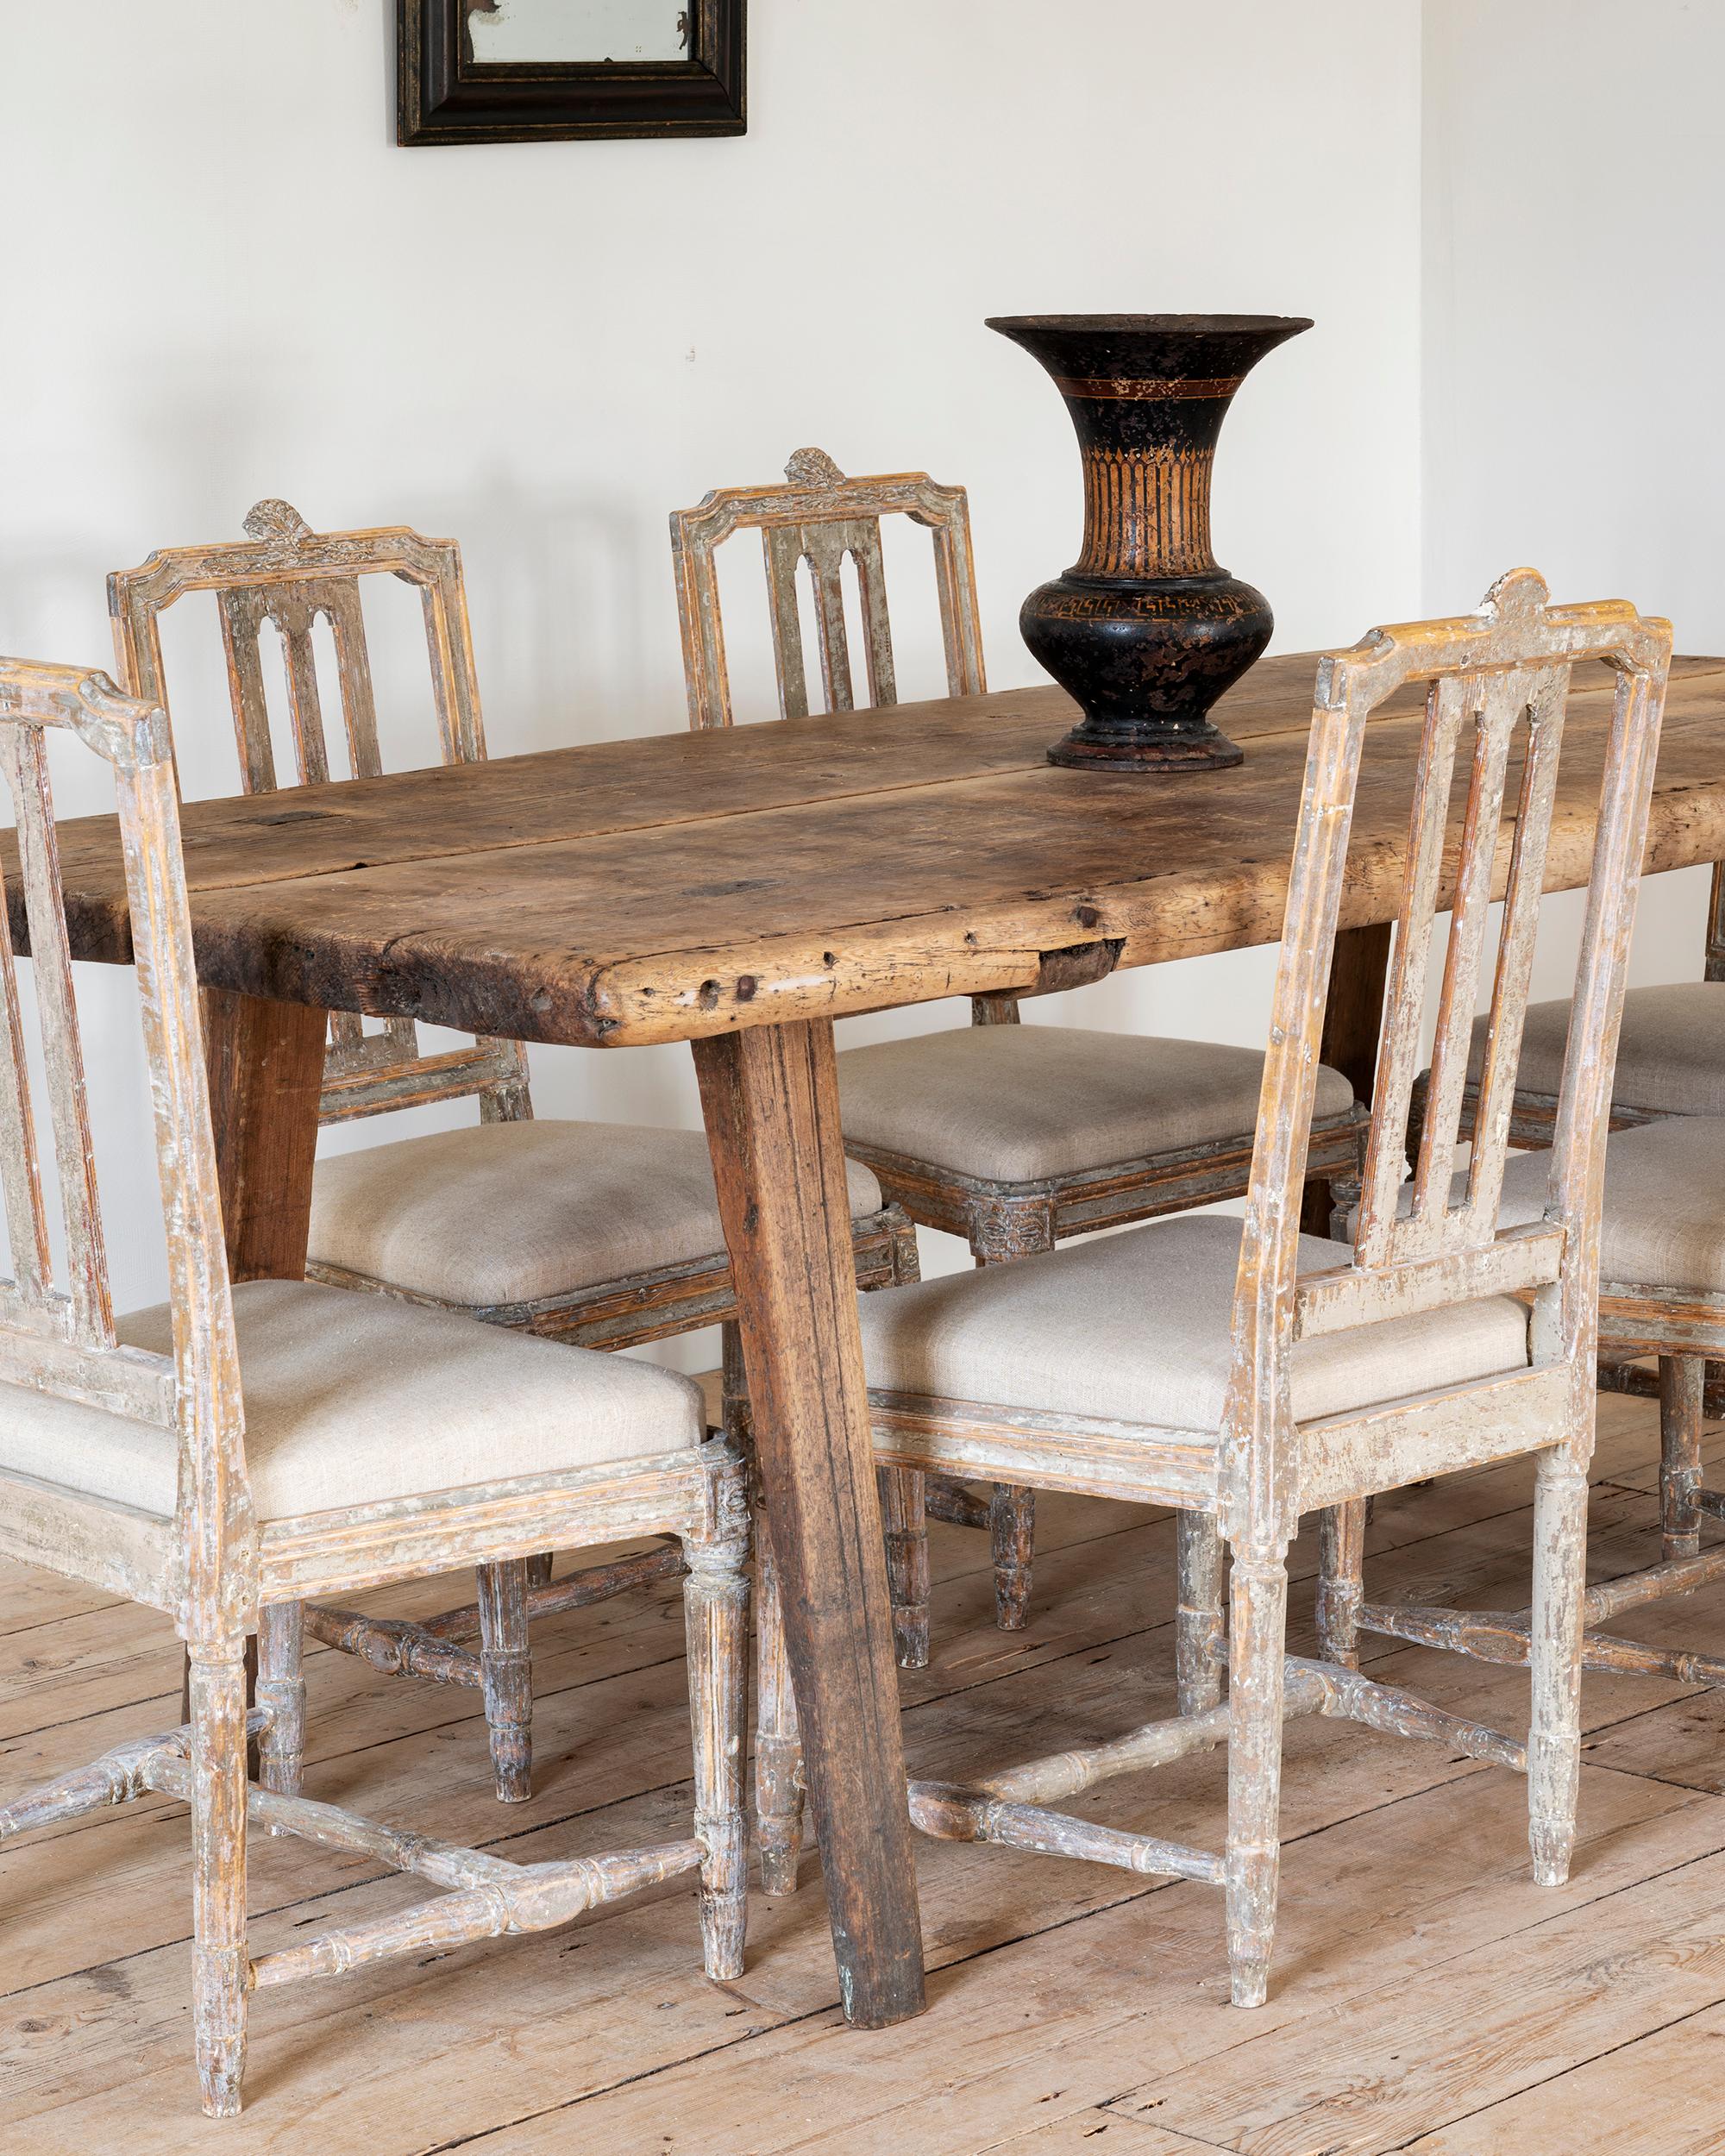 Hand-Crafted Rare 17th century Swedish Vernacular Farmhouse Dining Table